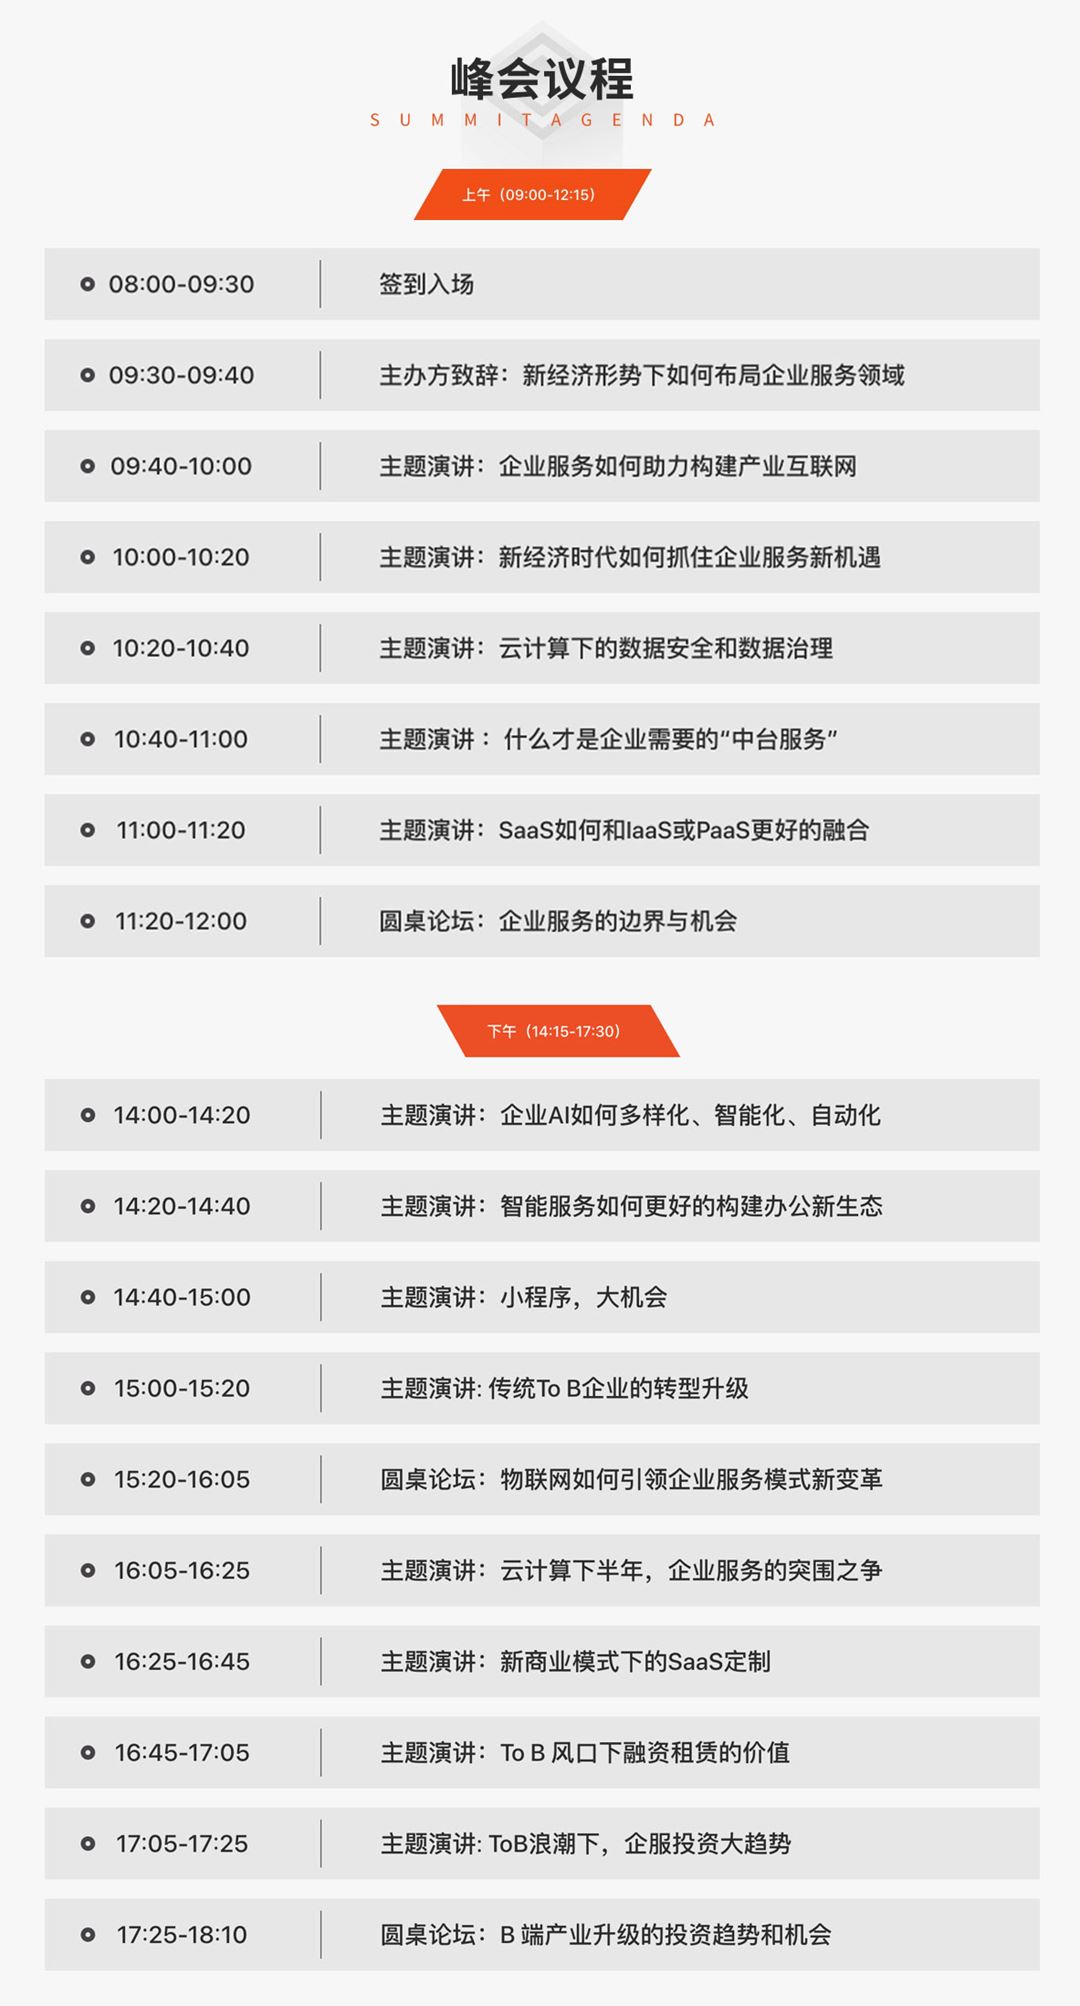 FUS猎云网2019年度企业服务产业创新峰会（上海）